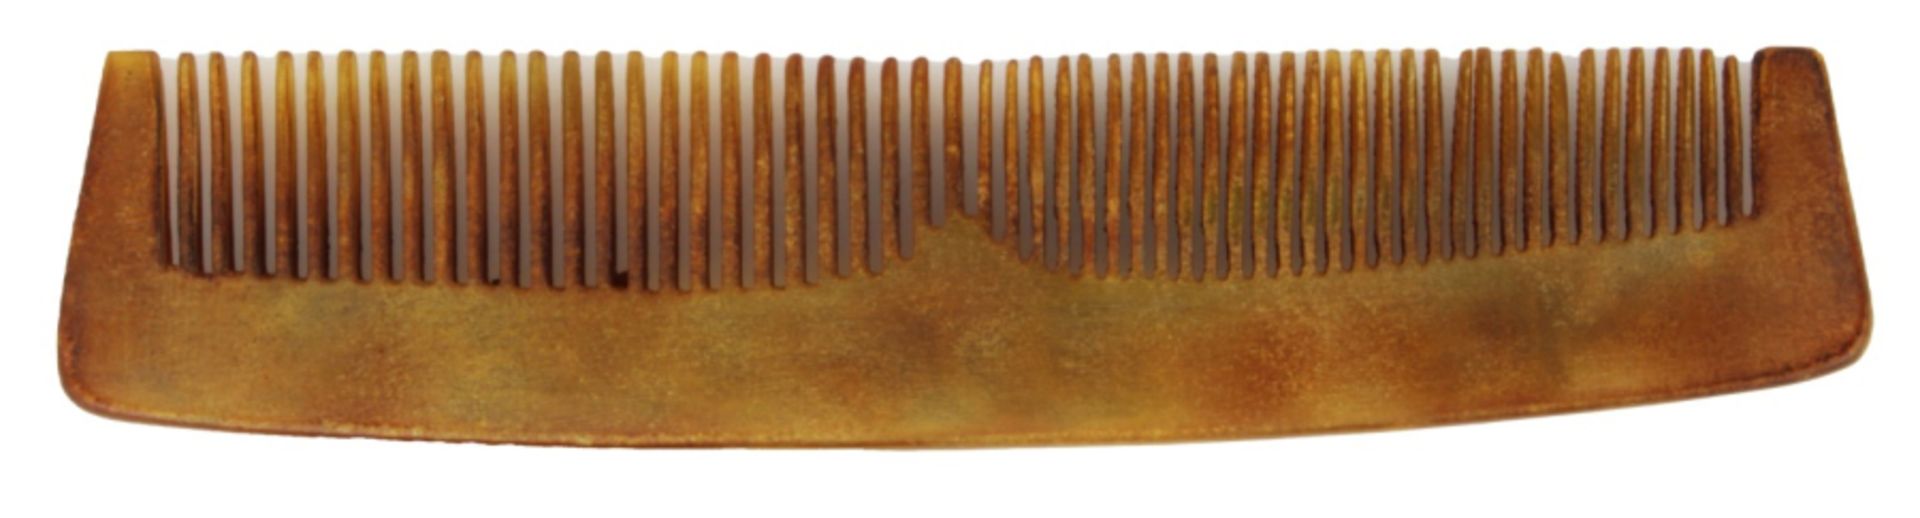 A Safavid comb - Image 2 of 4